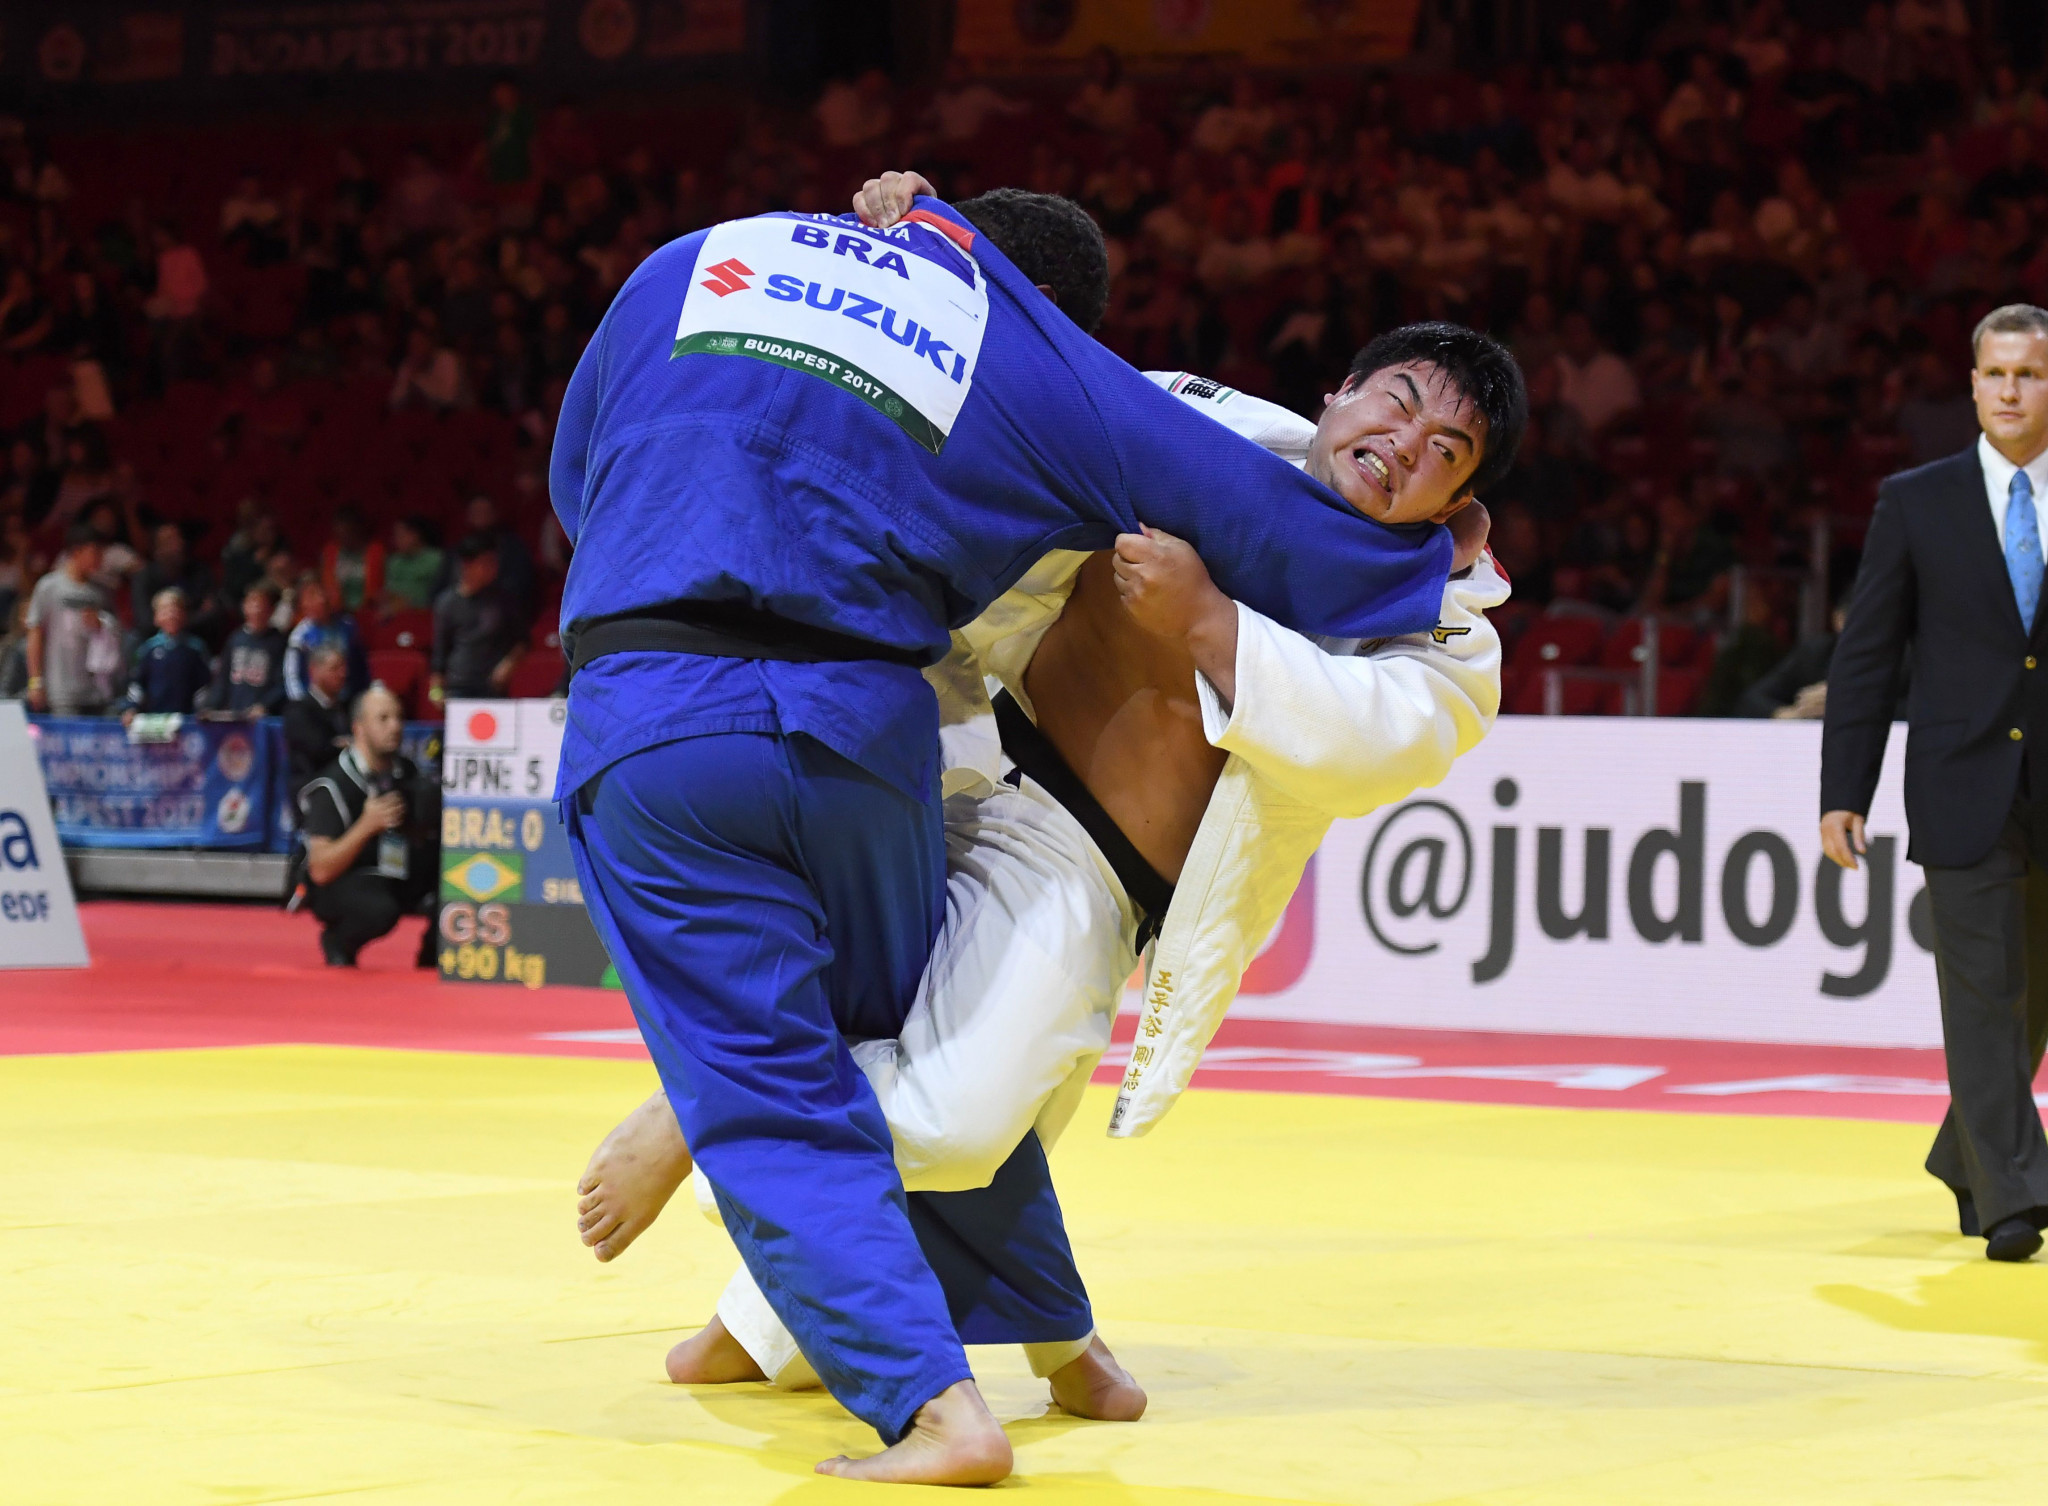 Takeshi Ojitani completed the clean sweep when he beat Rafael Silva Getty Images